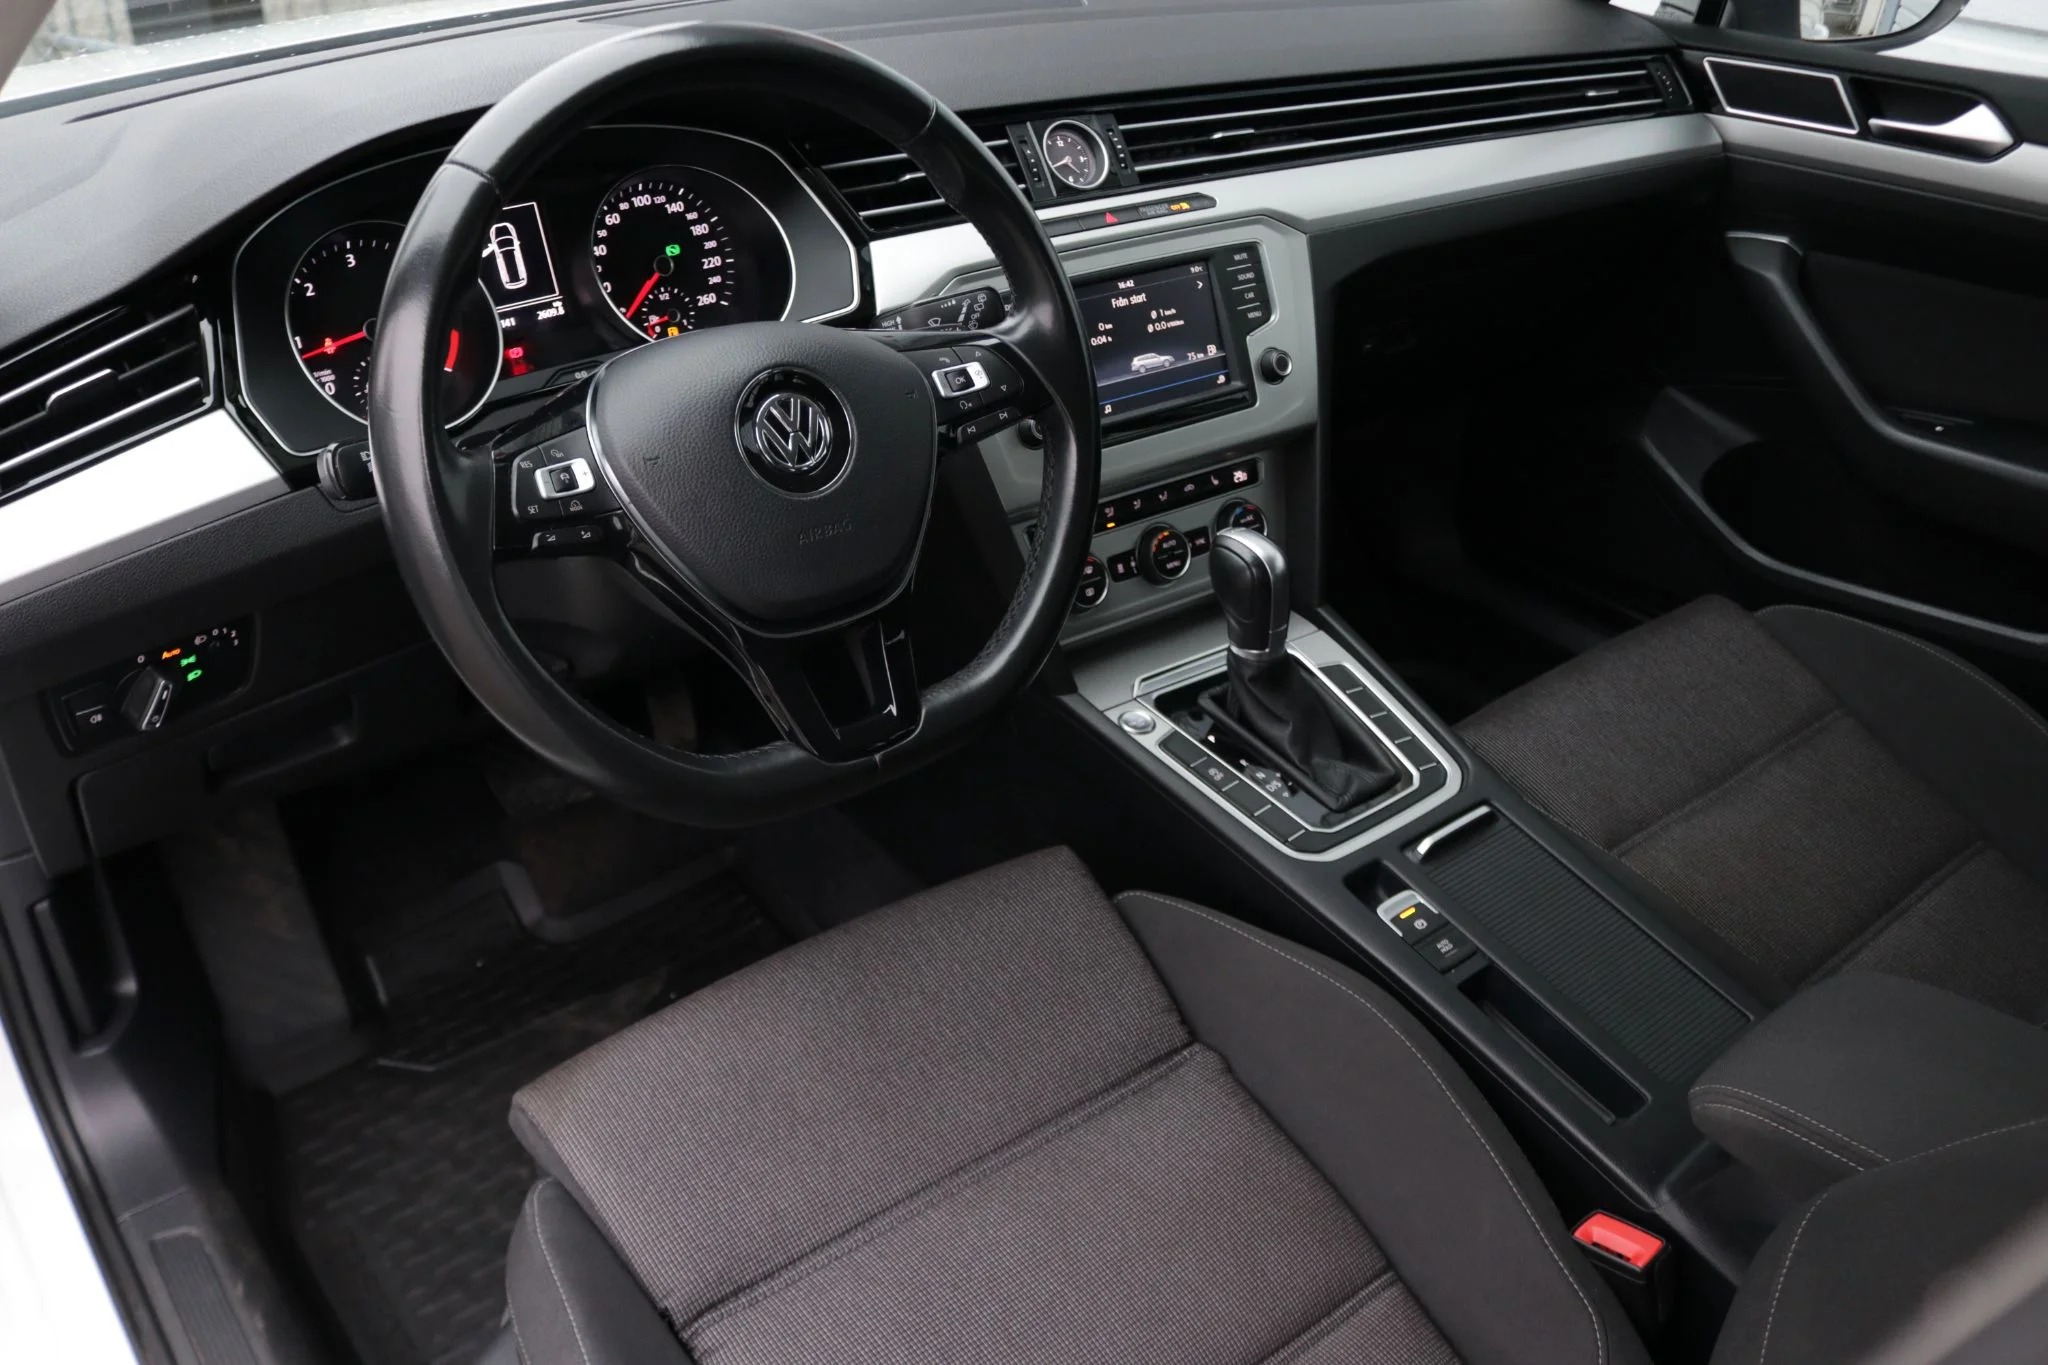 Volkswagen Passat Sportscombi 2.0 TDI DSG Sekventiell, 150hk, 2017